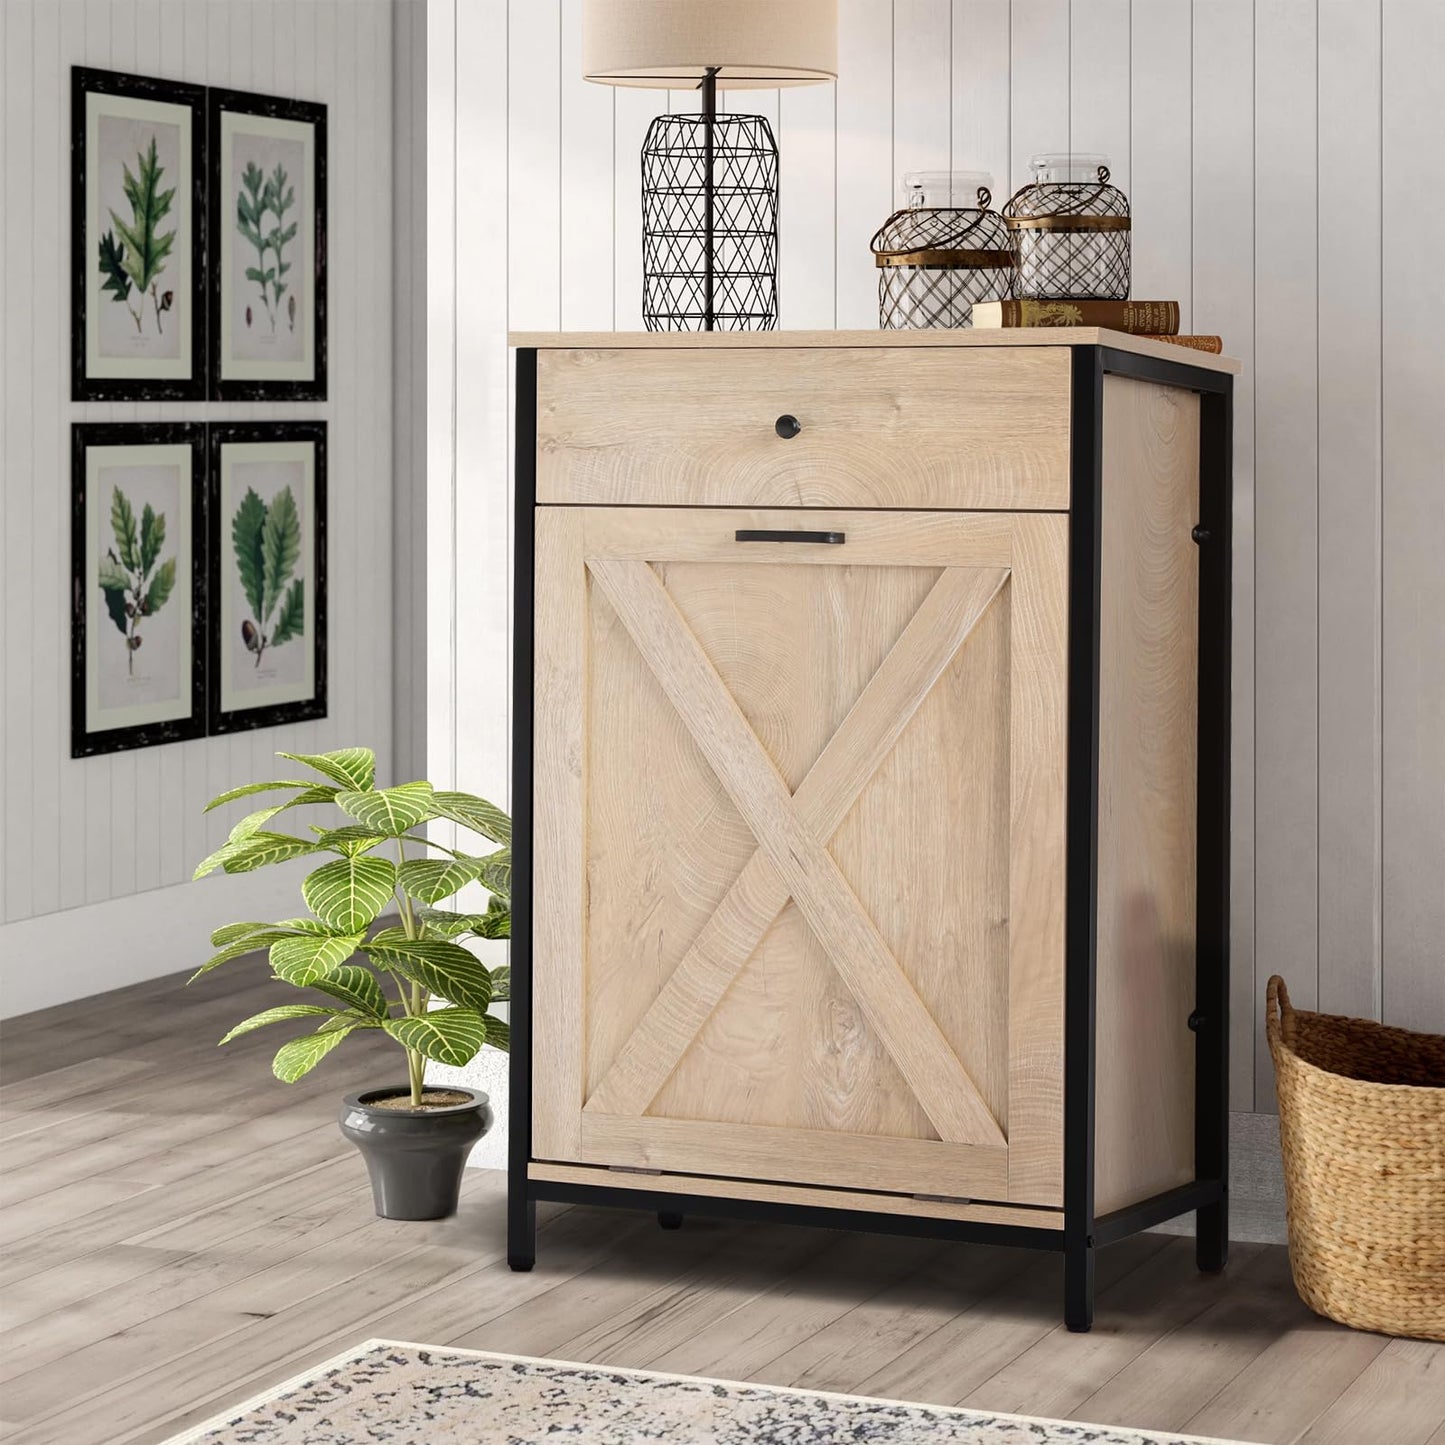 UEV Oak Color Style Trash Cabinet, Tilt Out Trash Cabinet with Solid Hideaway Drawer,Rustic Kitchen Trash Cabinet,Free Standing Wooden Kitchen Recycling Cabinet Trash Can Holder (Single)